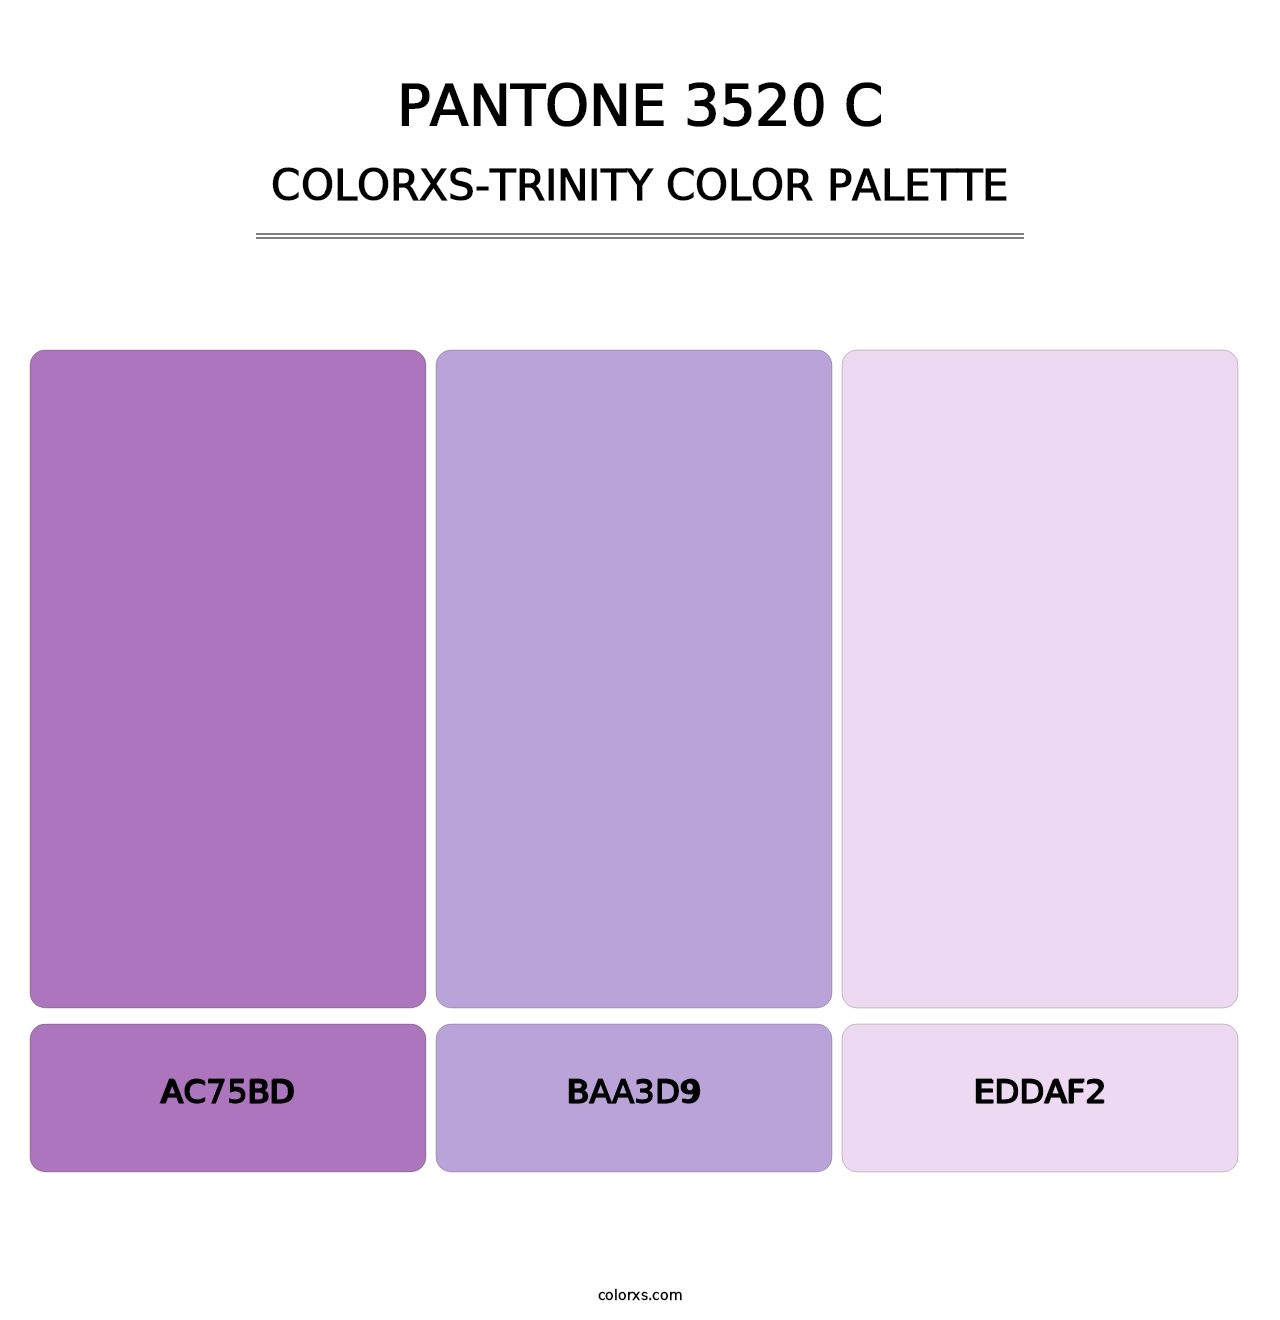 PANTONE 3520 C - Colorxs Trinity Palette